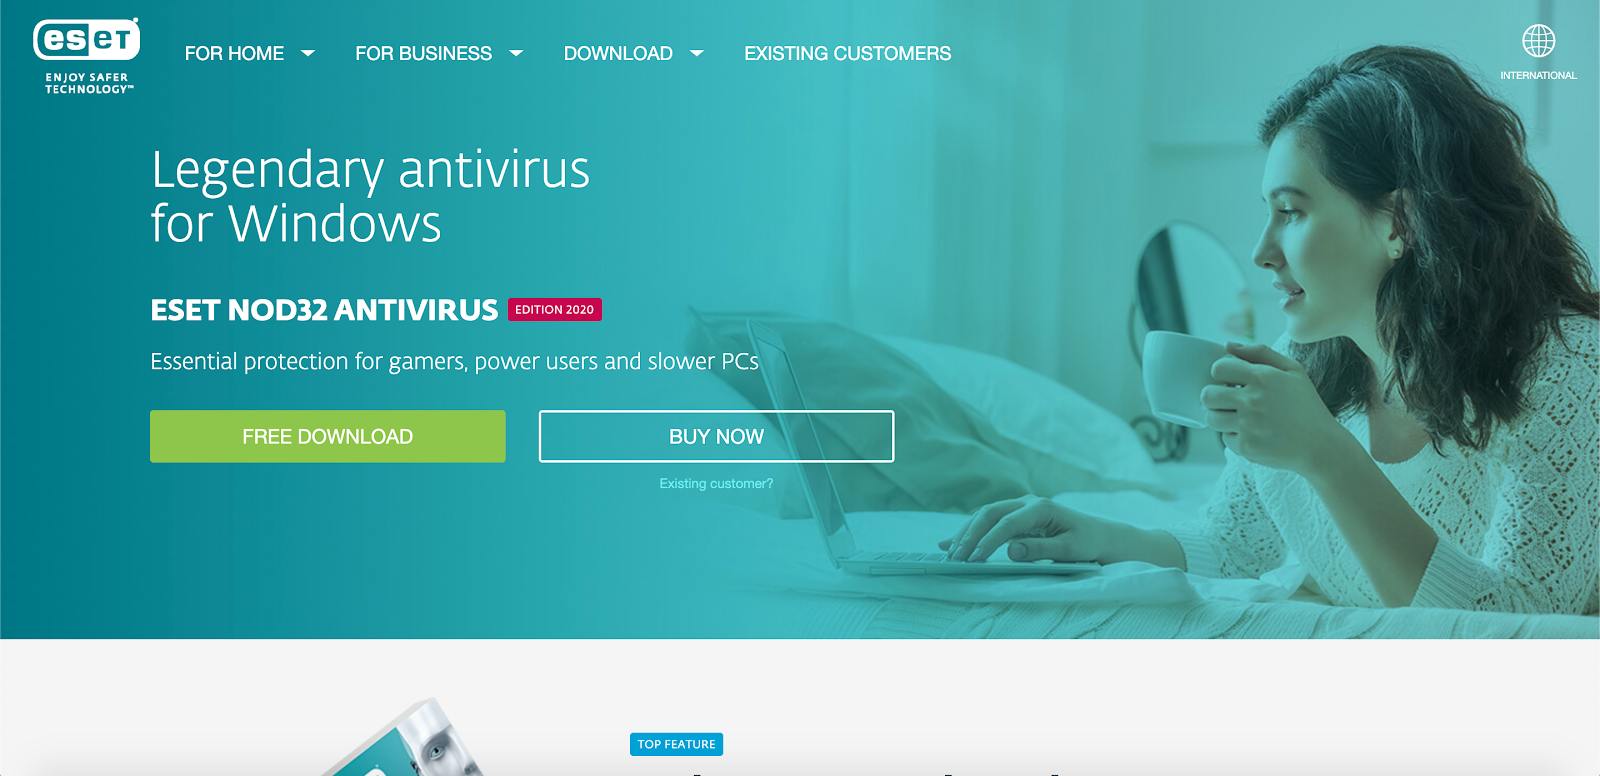 eset nod32 antivirus business edition 9 download